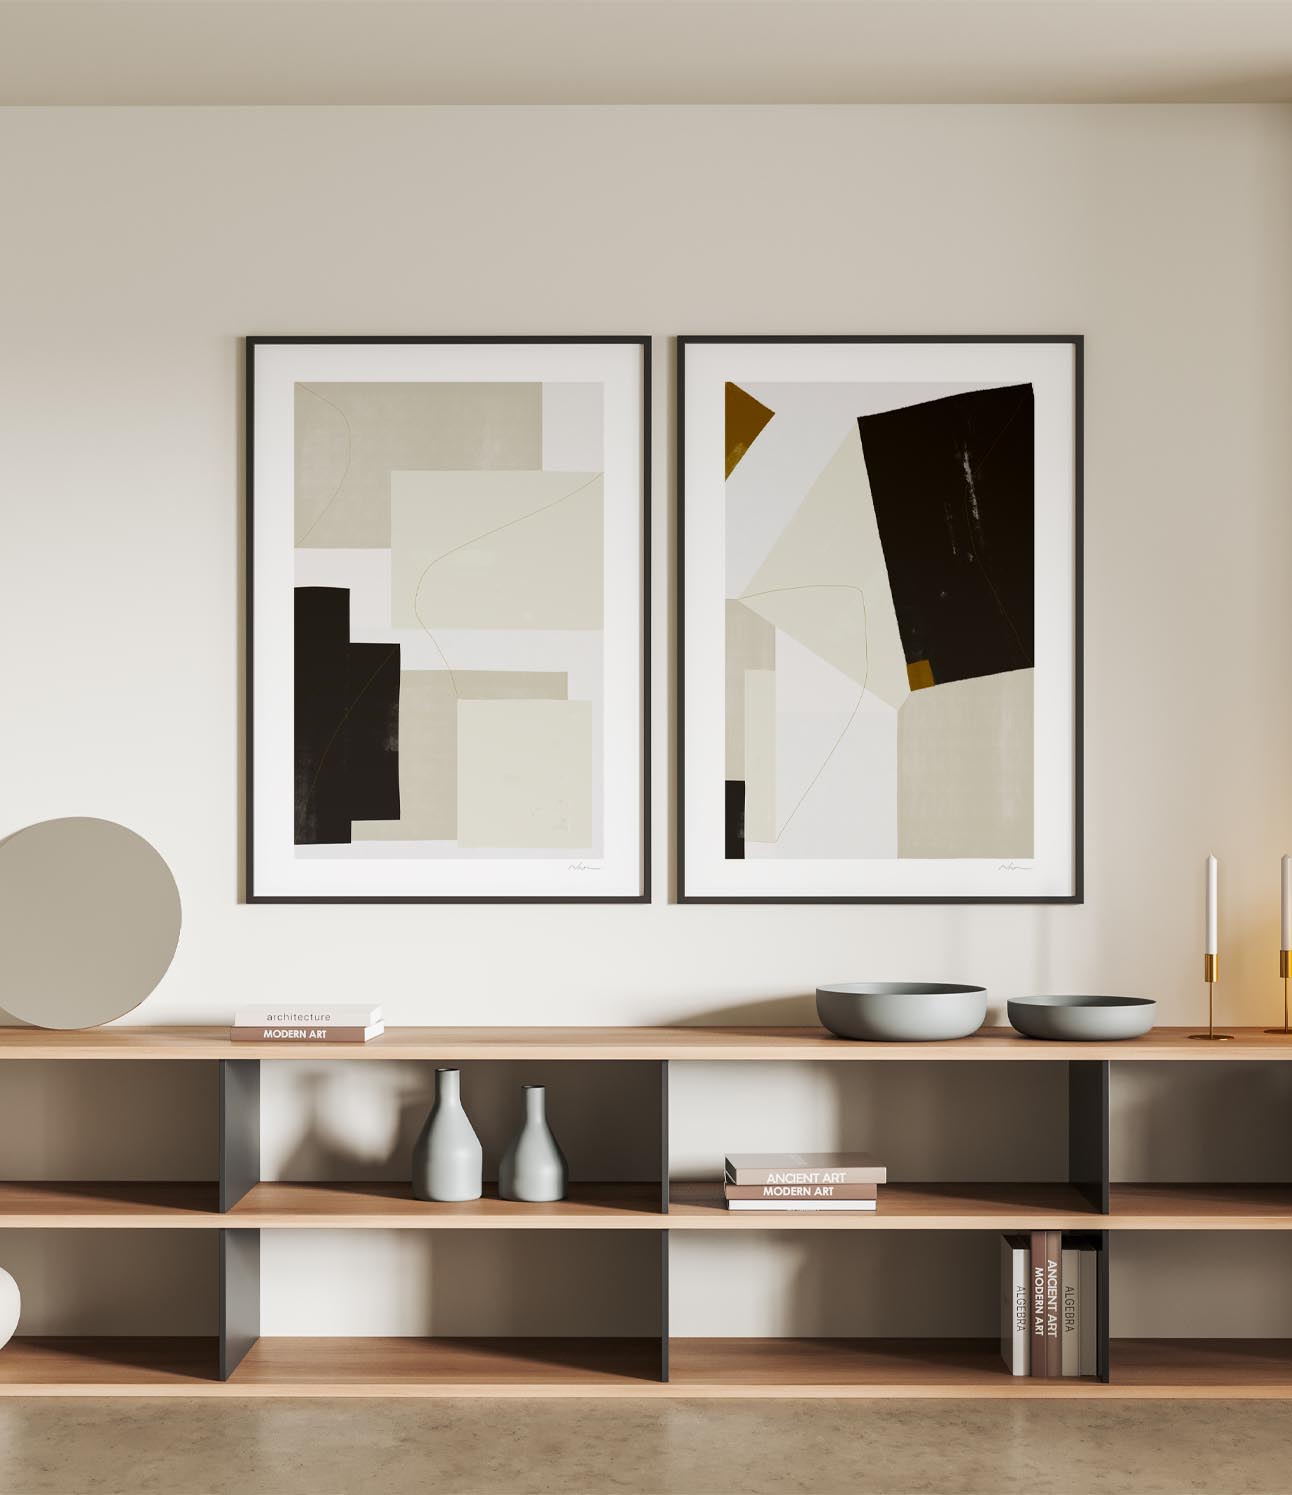 En Pièces Series- Original abstract fine art prints for modern home decor - Studio Ninon